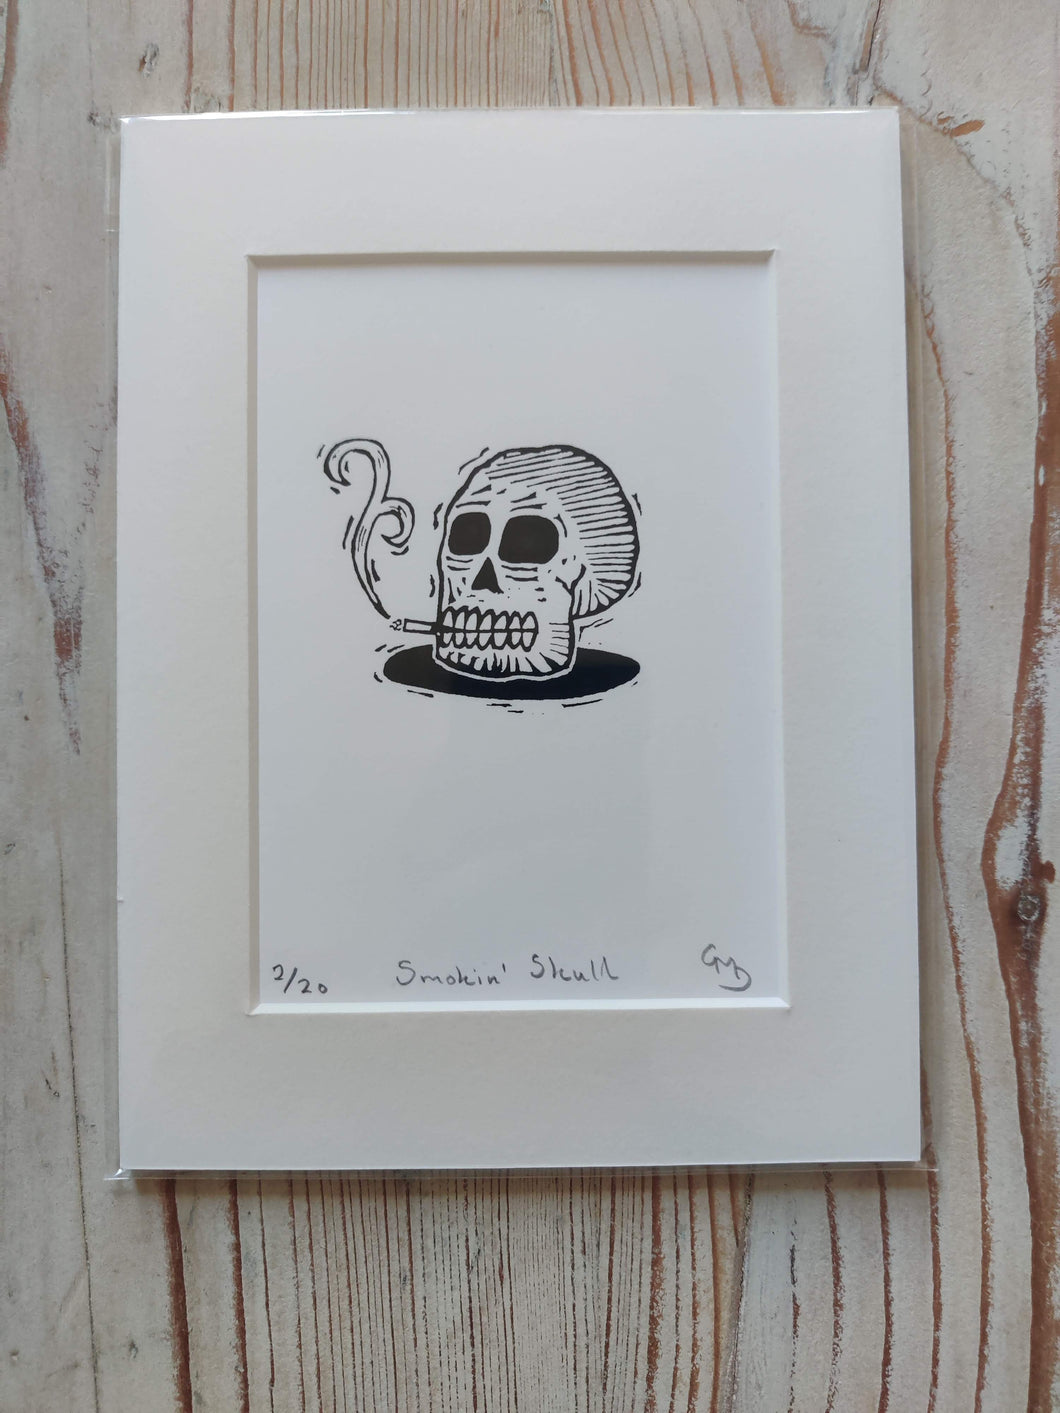 Pop art masterpiece - 'Smokin' Skull' - limited edition silk screen print